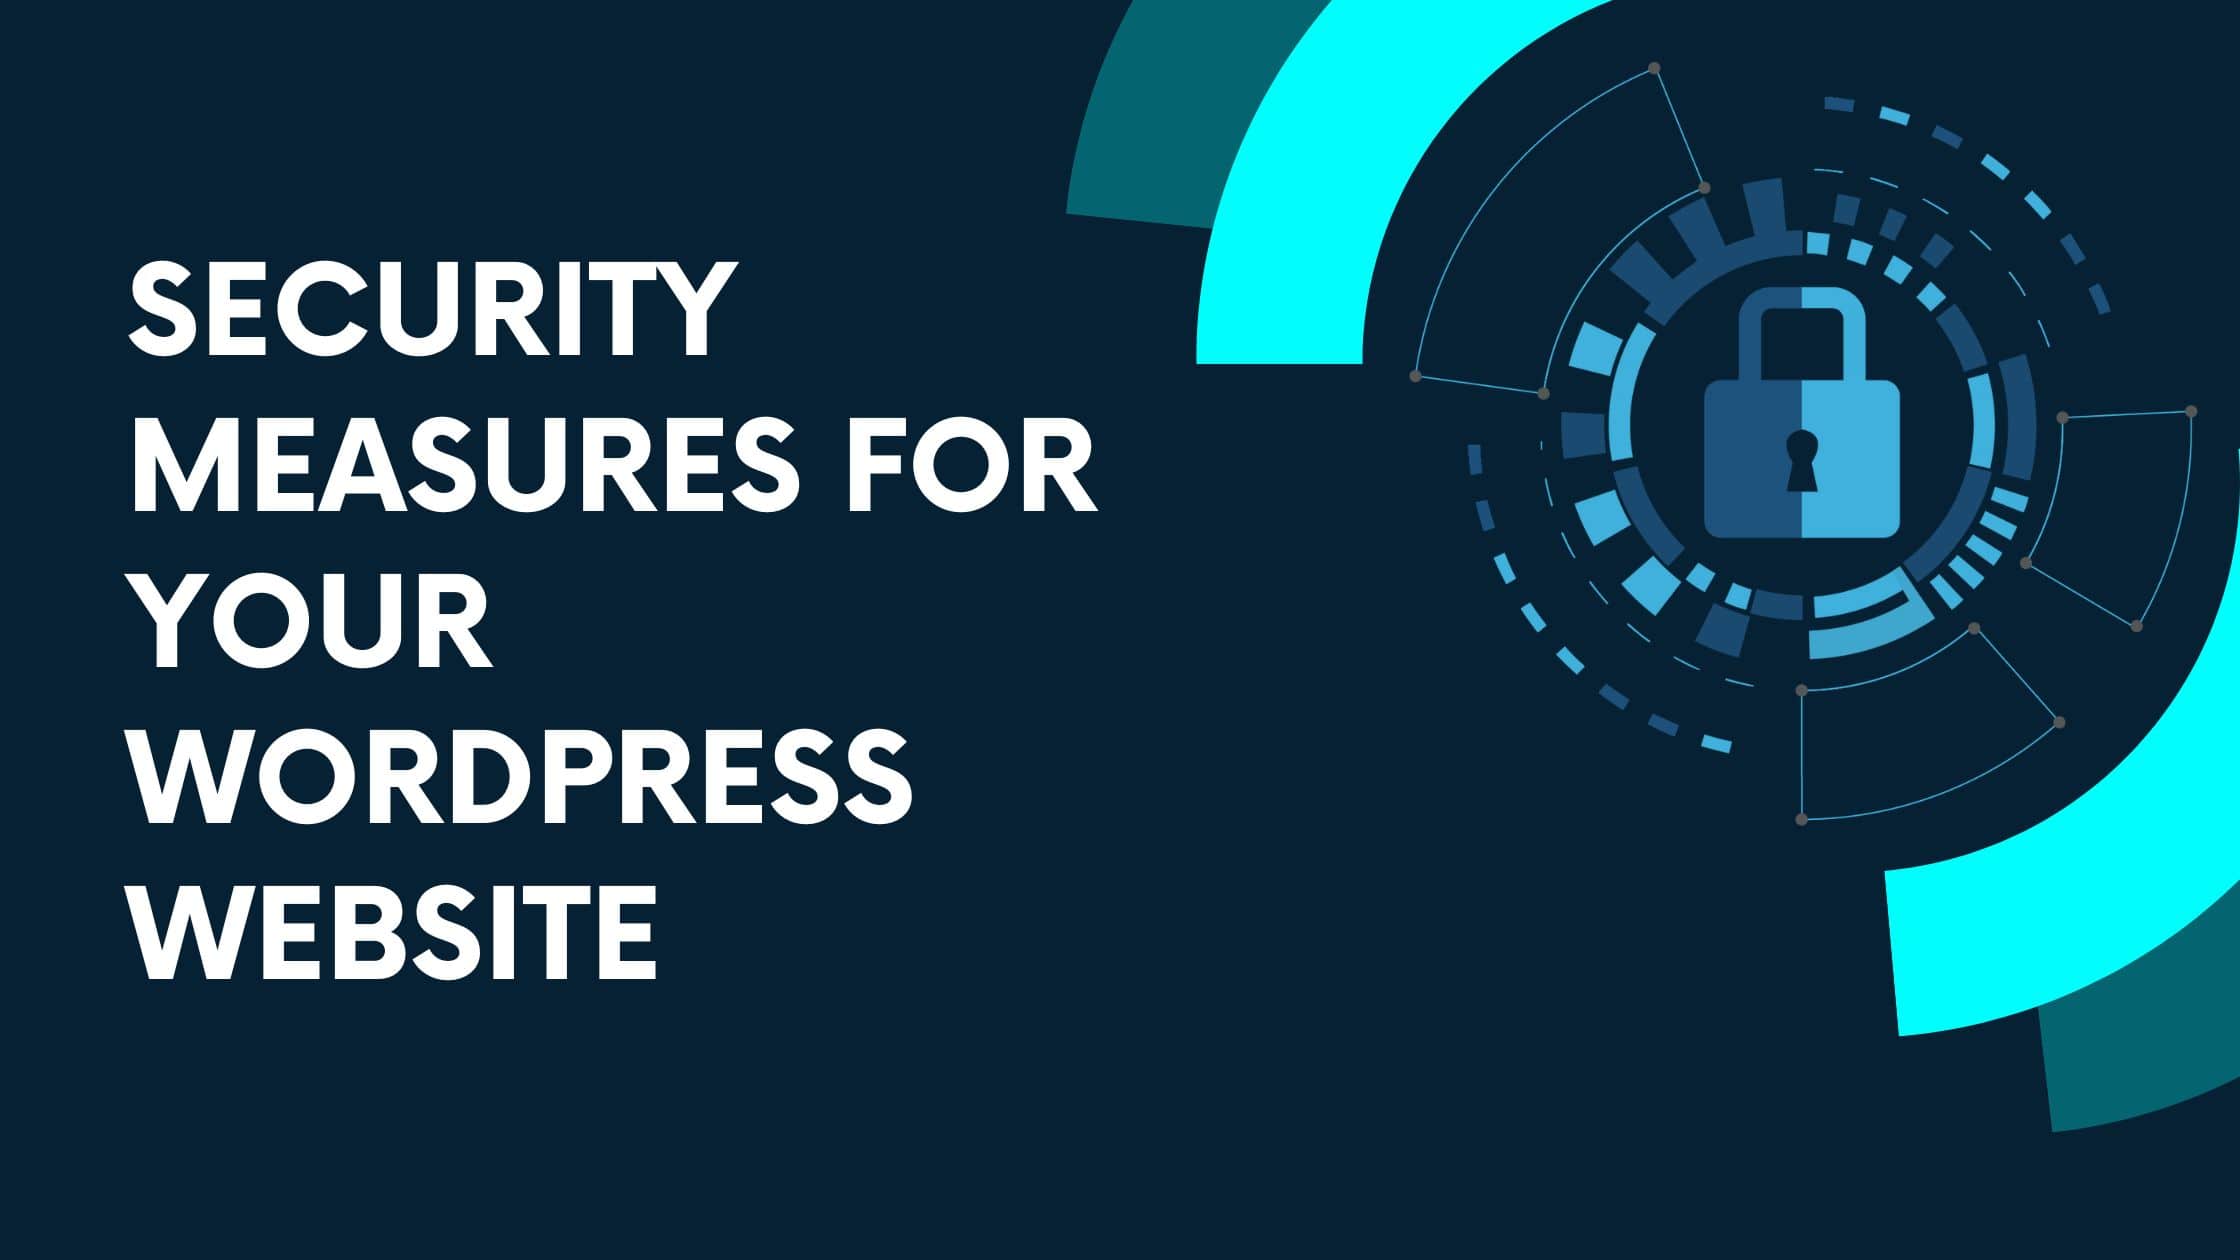 Security measures for your WordPress website